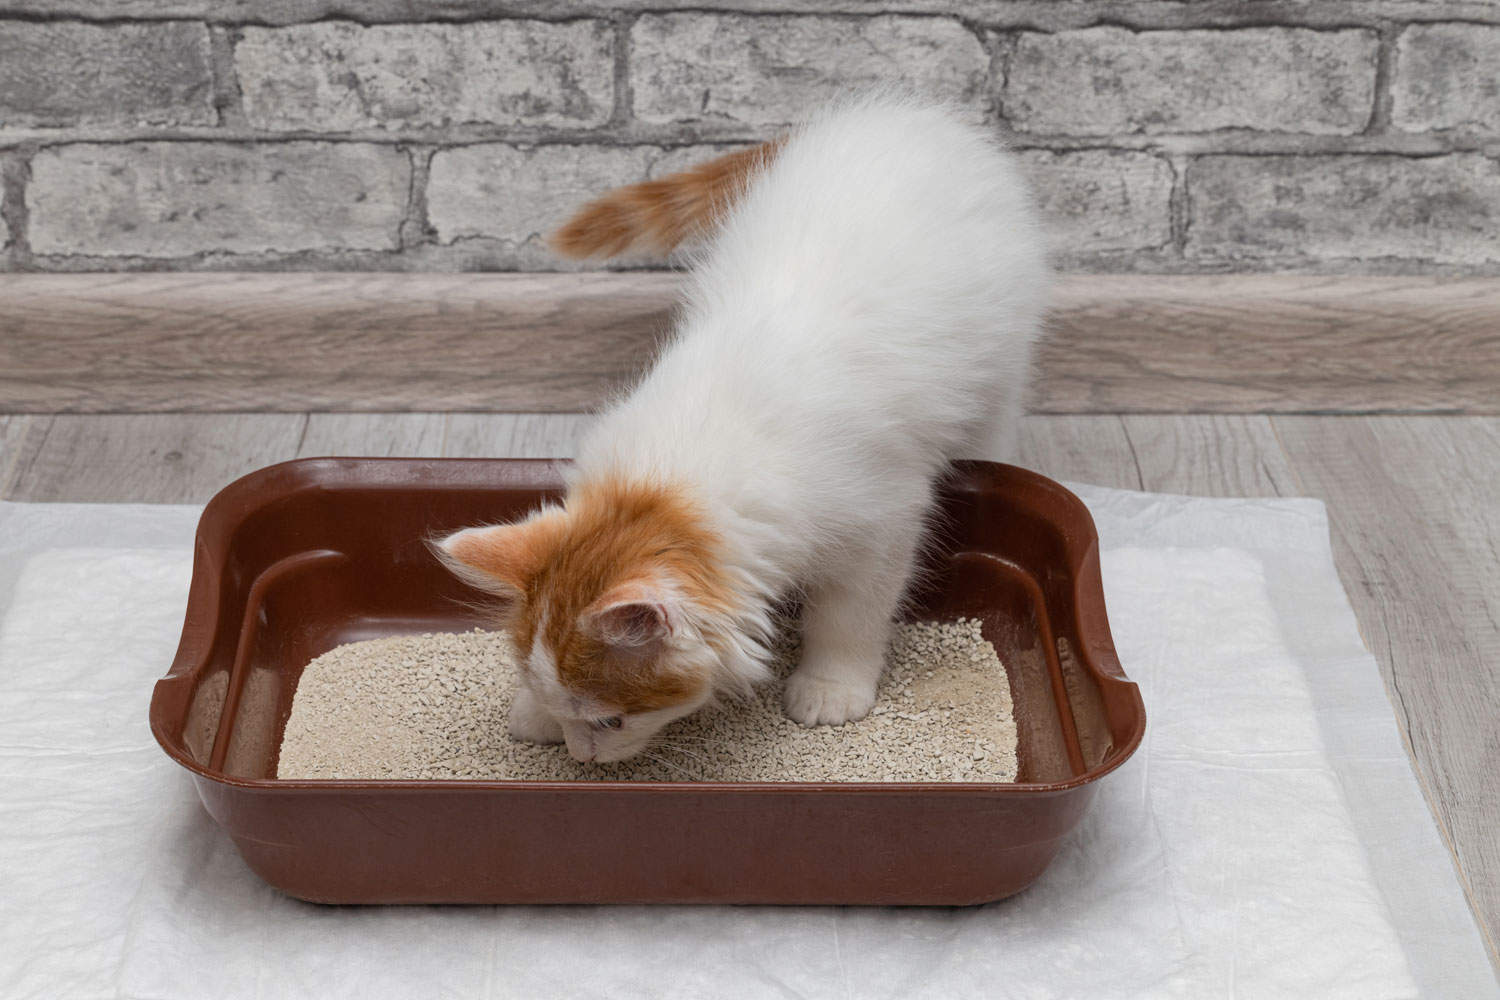 little kitten goes to the toilet in the tray. litter box training. raising a kitten
